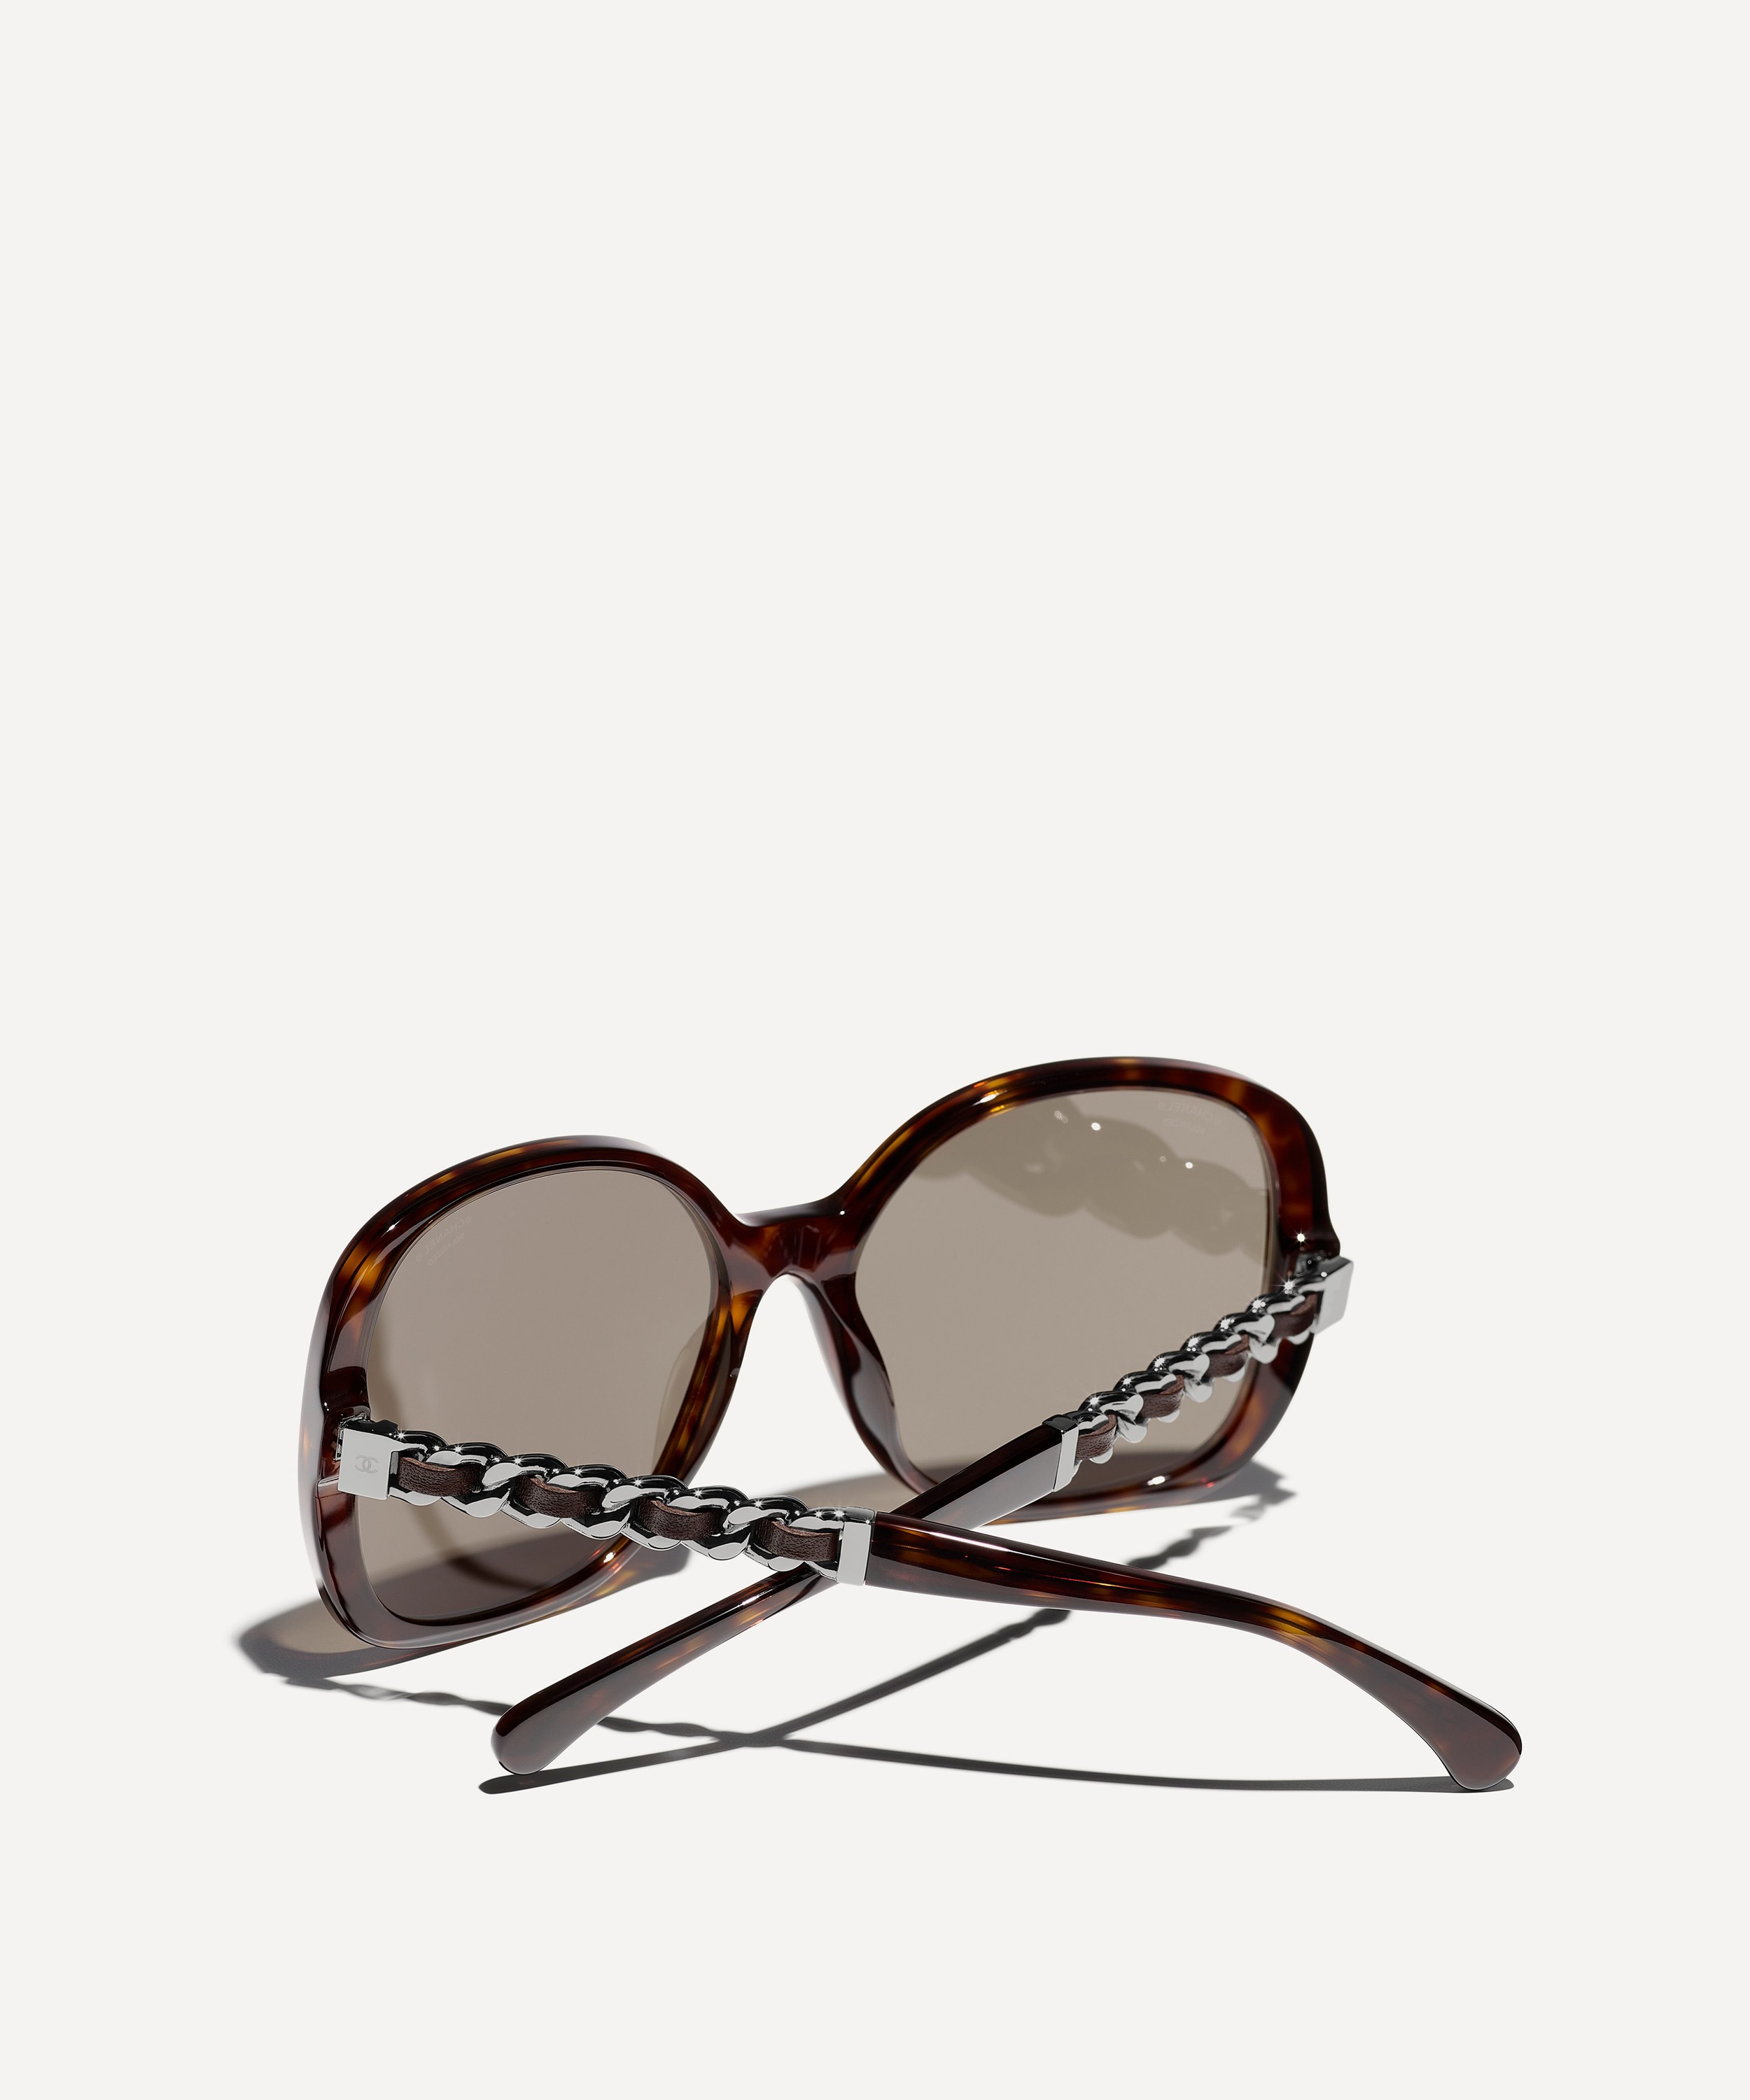  Chanel Sunglasses Women